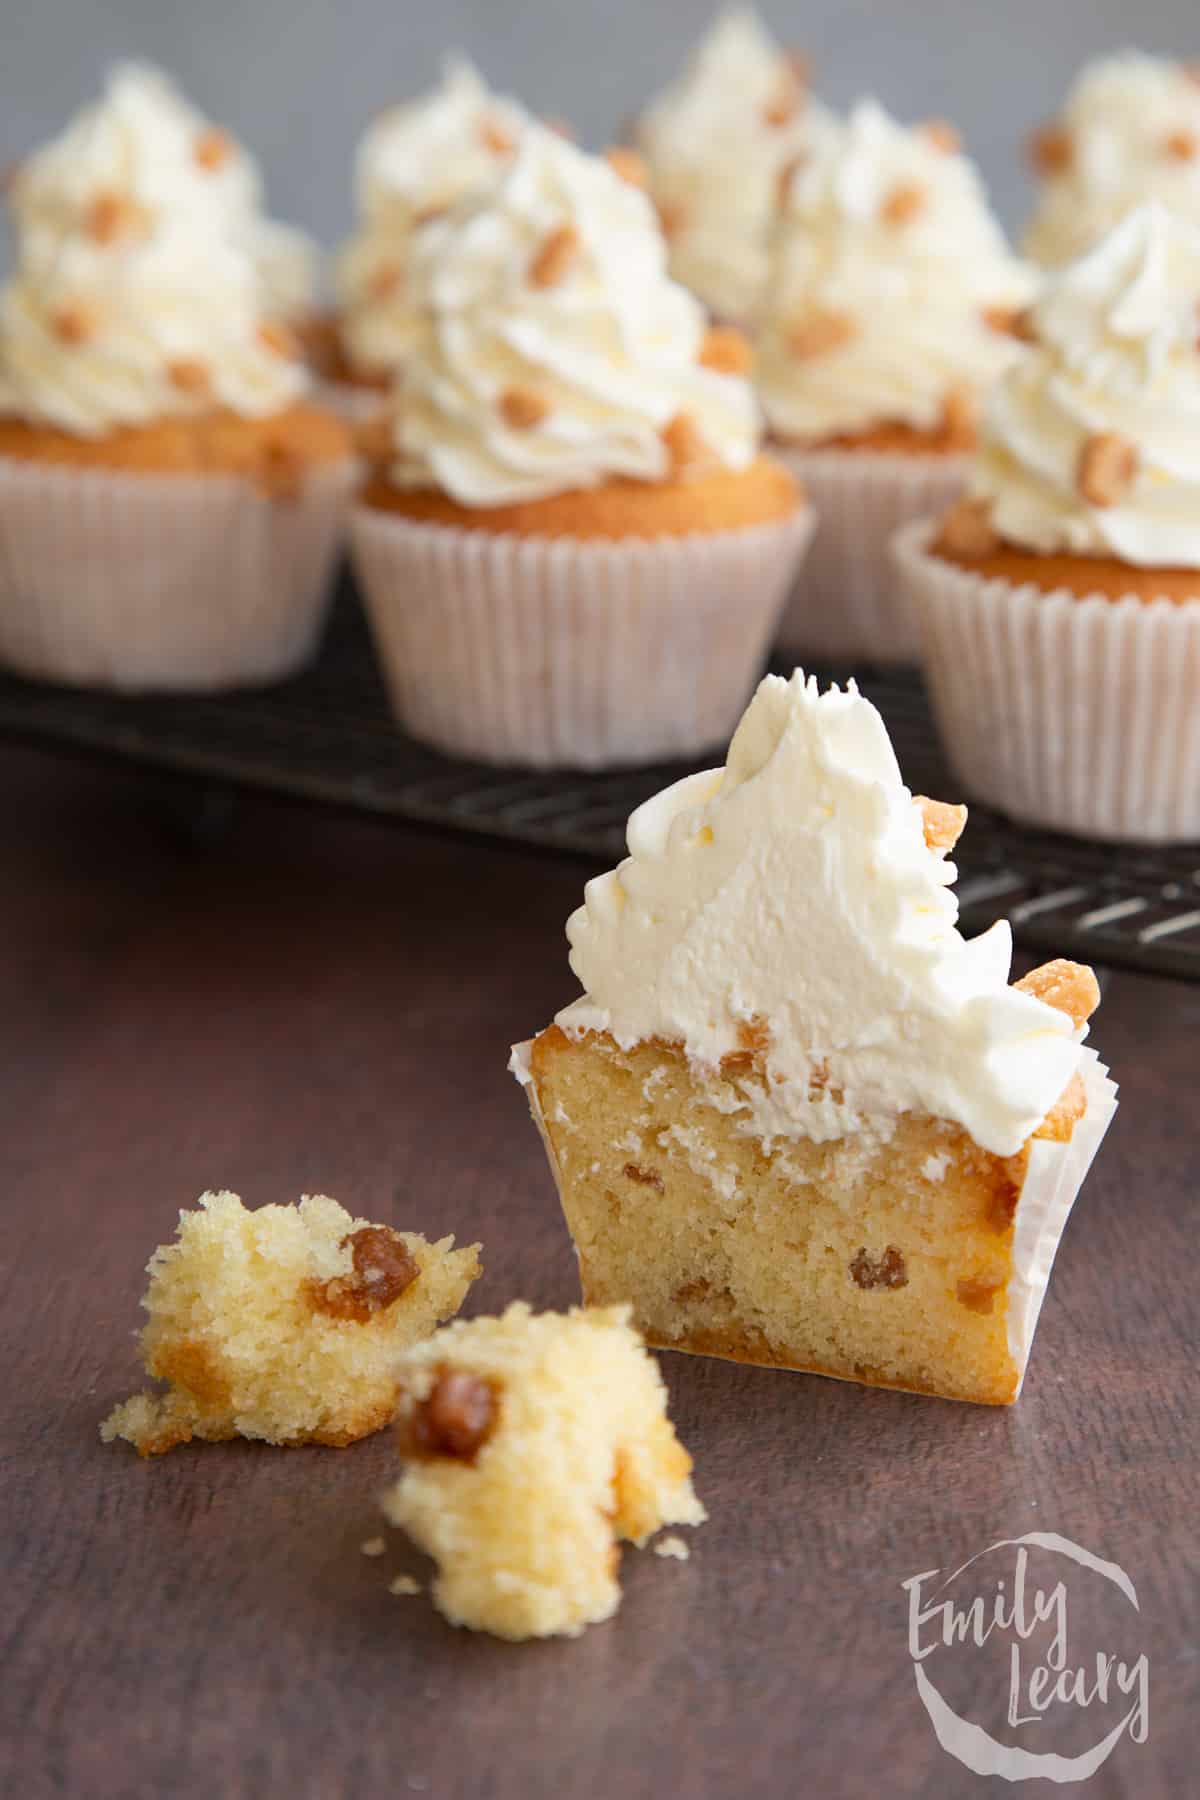 a vanilla fudge cupcake topped with vanilla buttercream and fudge pieces cut in half.